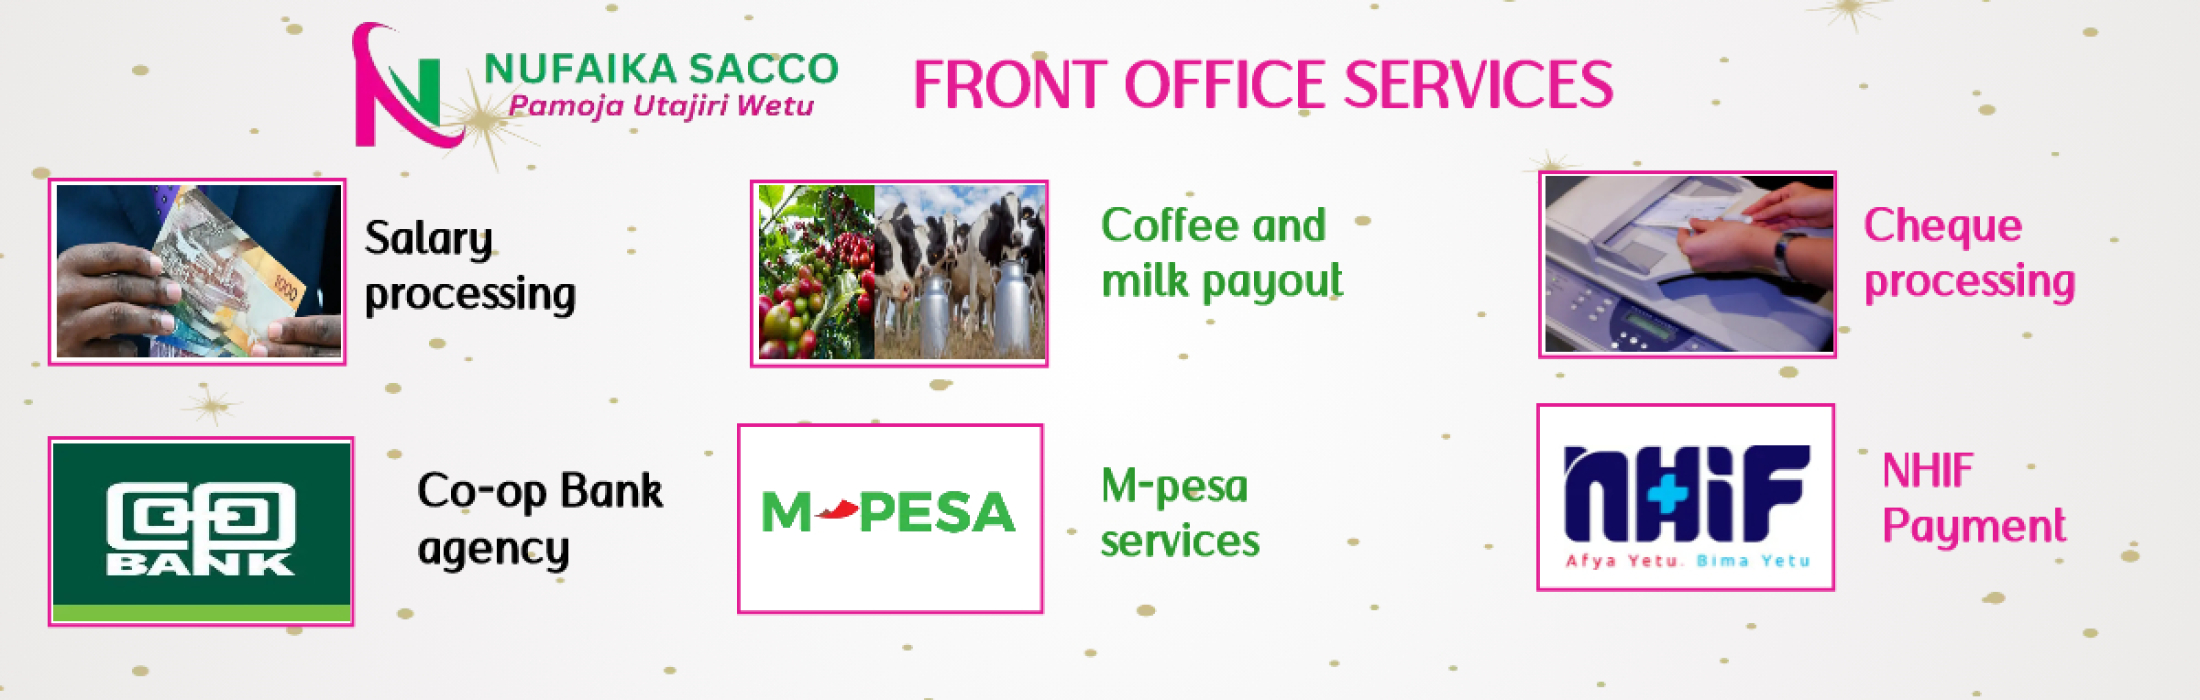 Nufaika Sacco fosa services